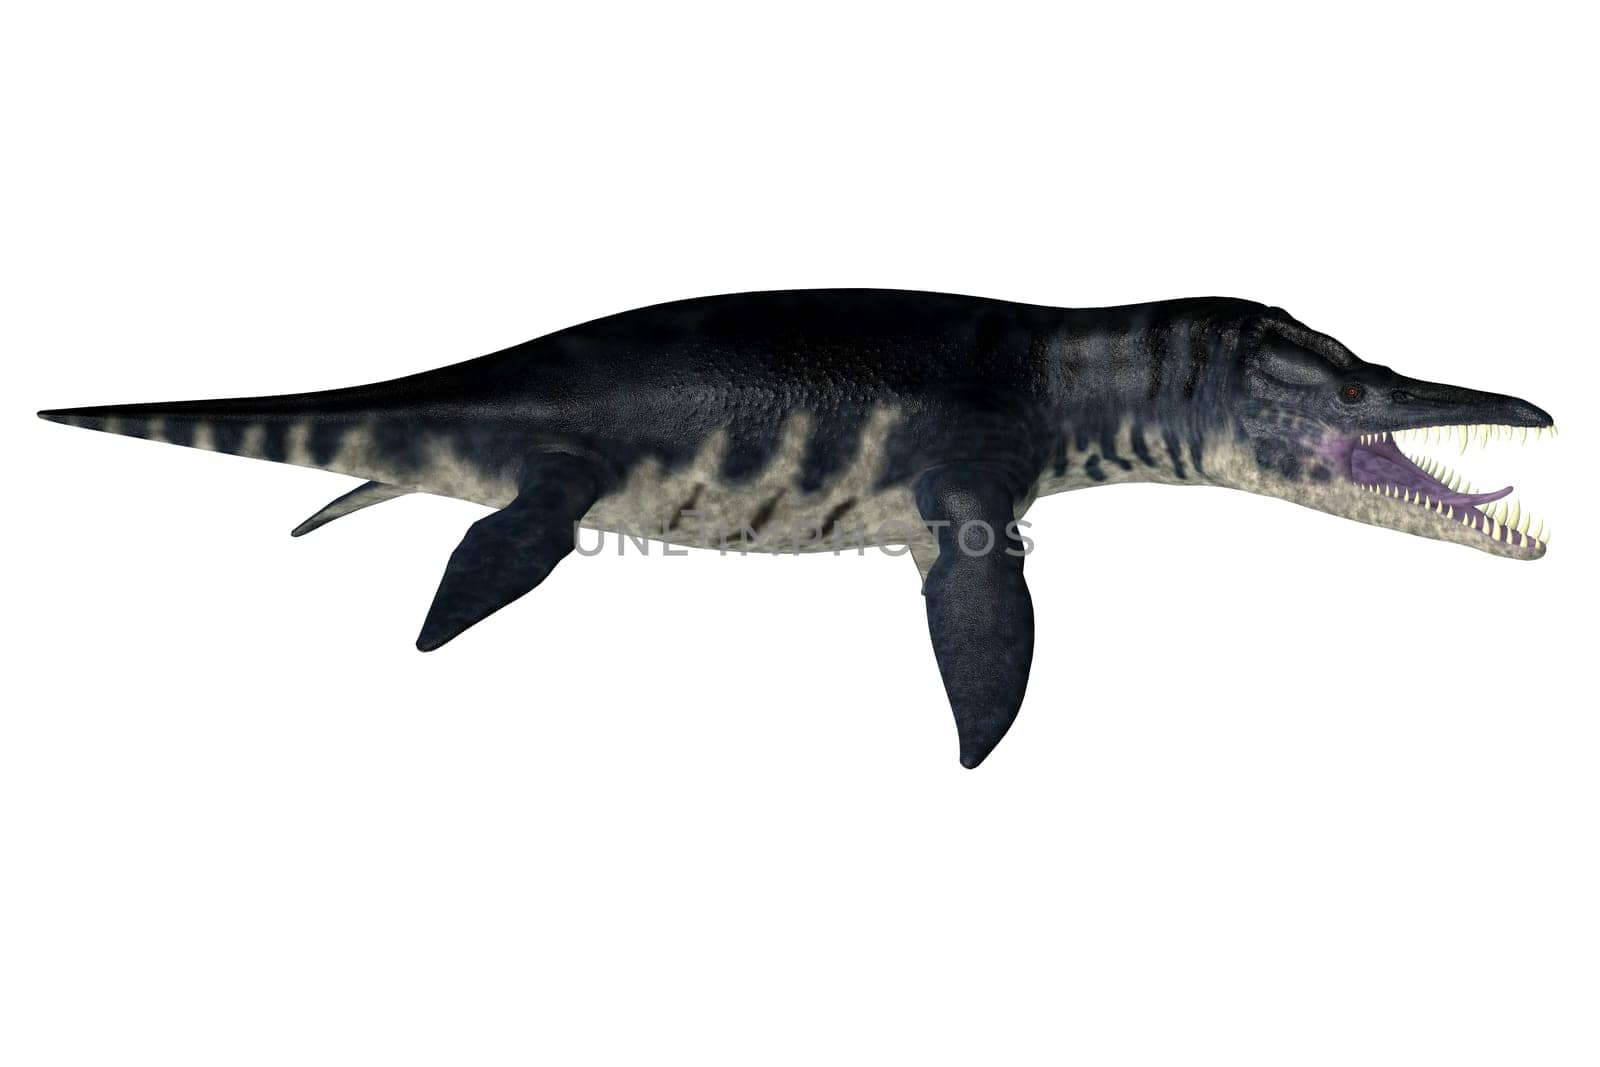 Liopleurodon Sea Reptile by Catmando